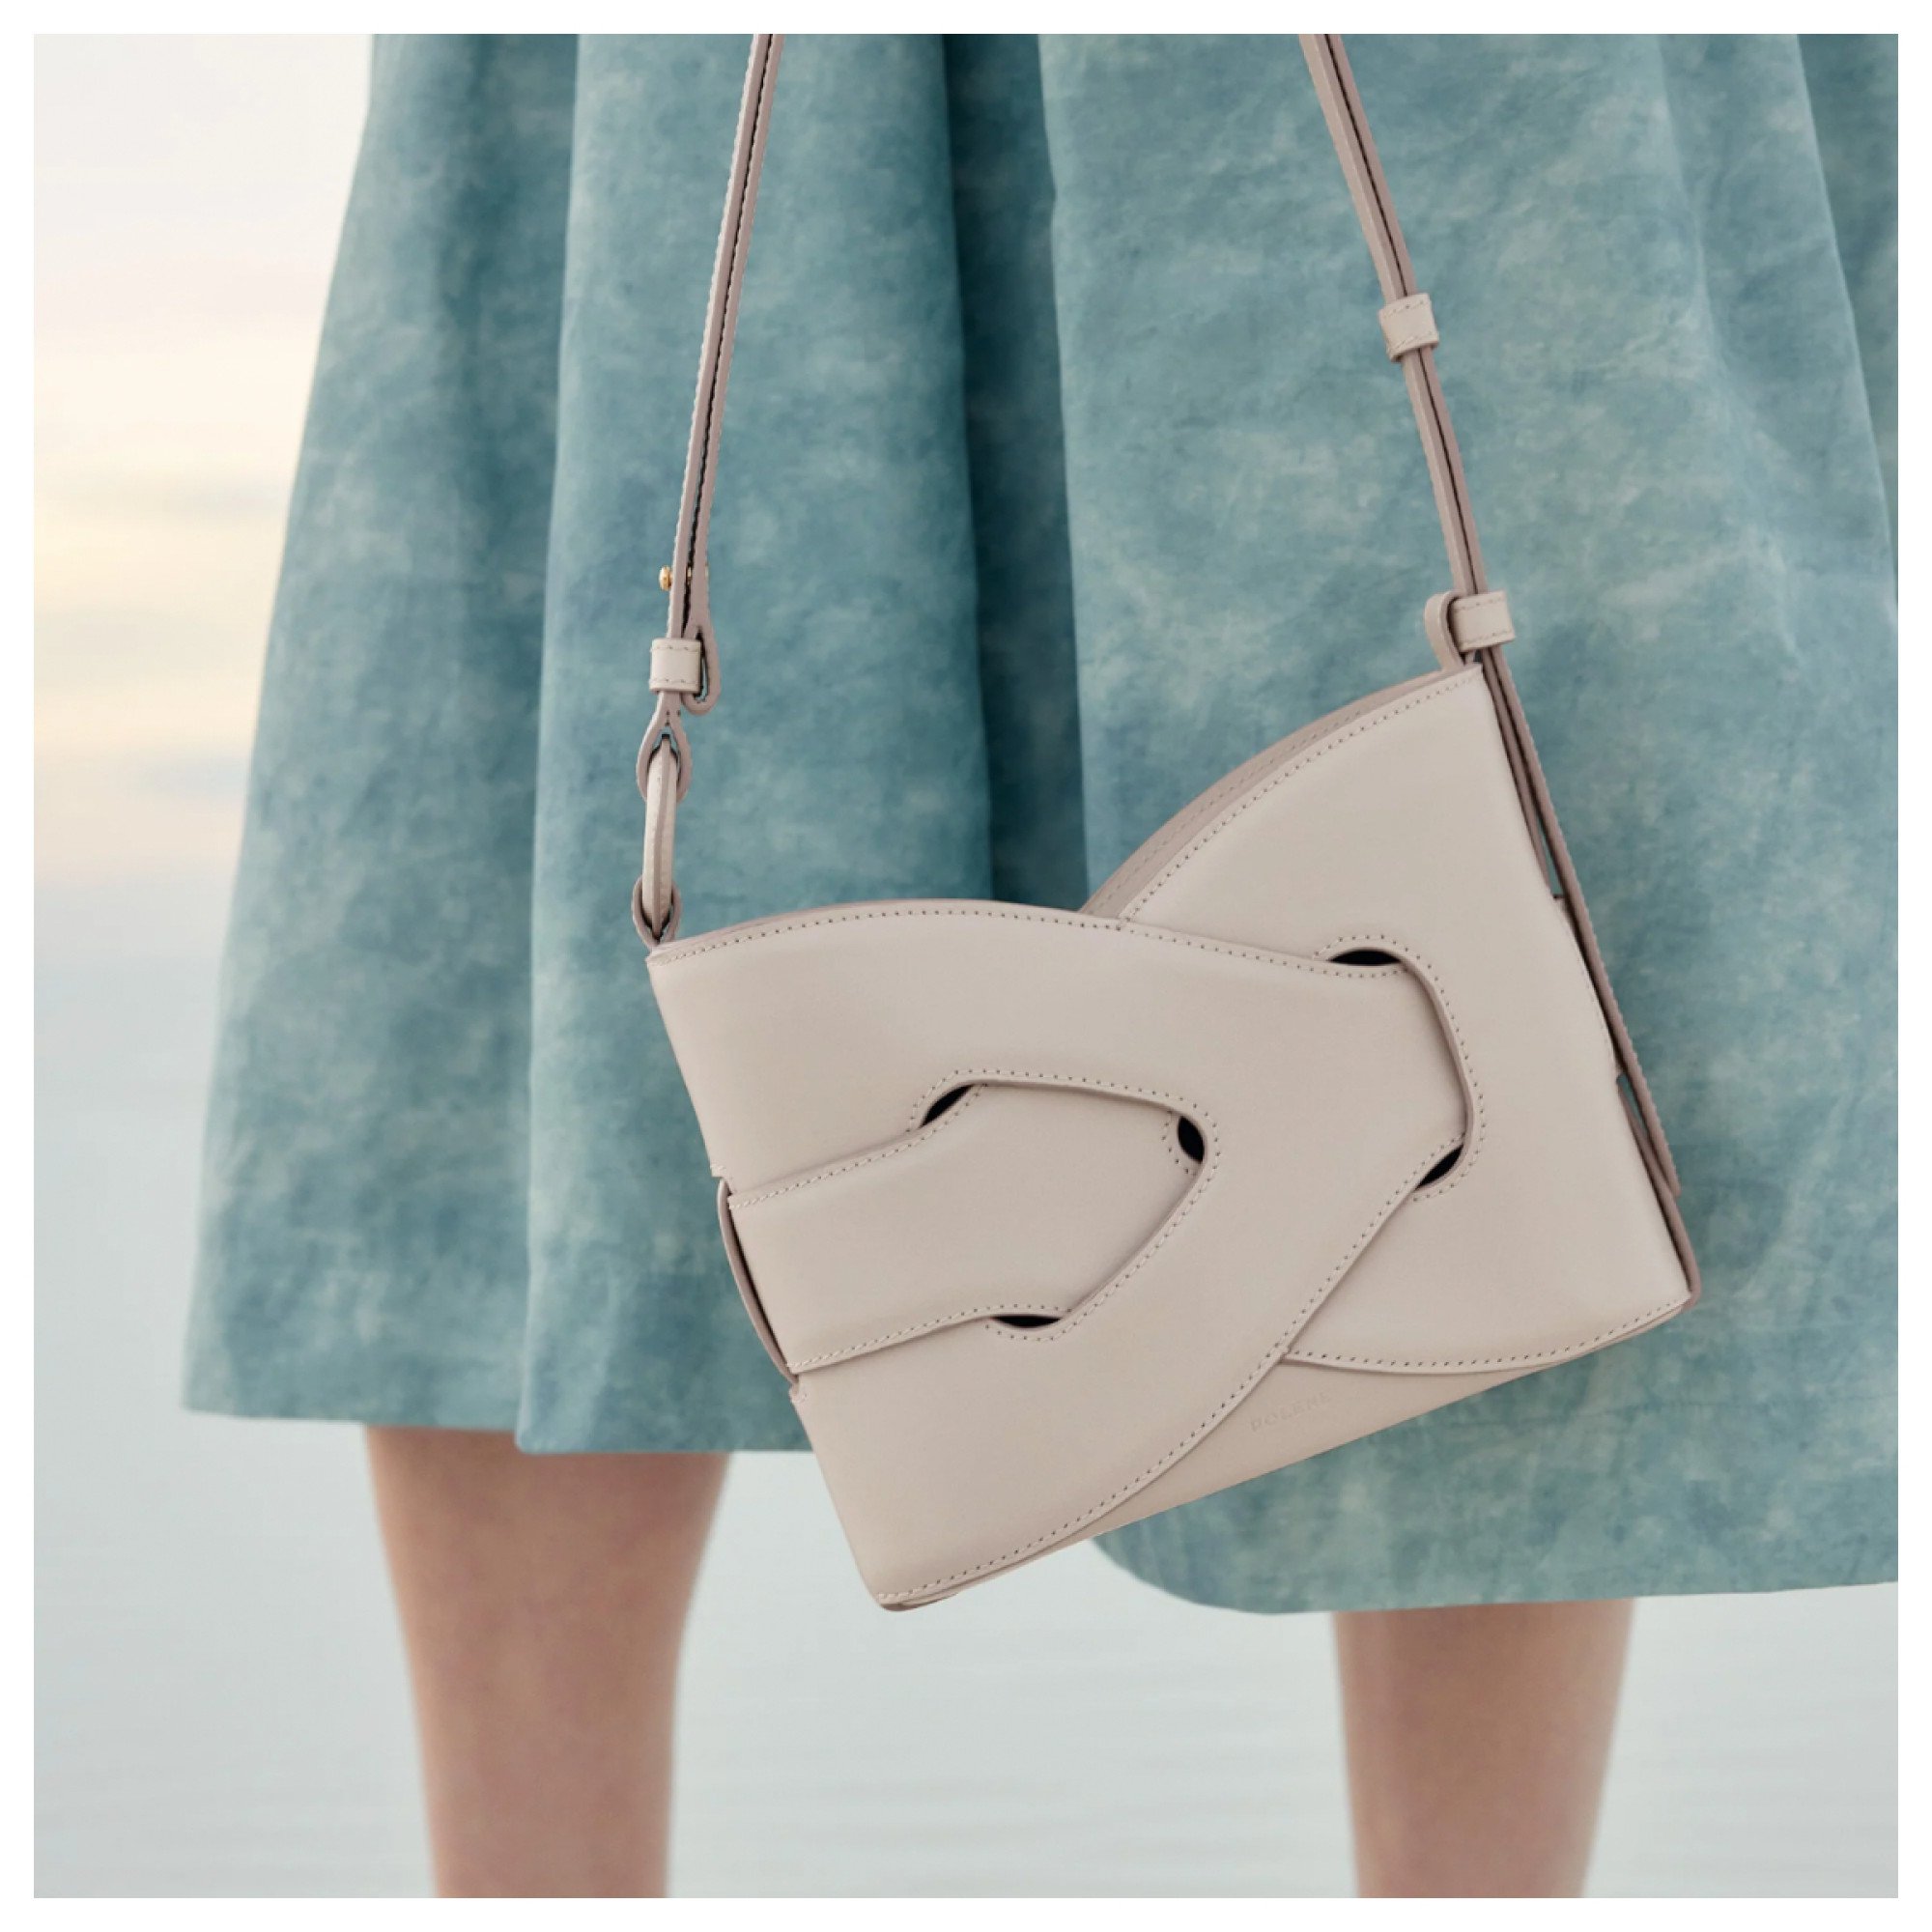 The Luxury Handbag Brand Quietly Taking Over French Fashion Circles -  Fashionista